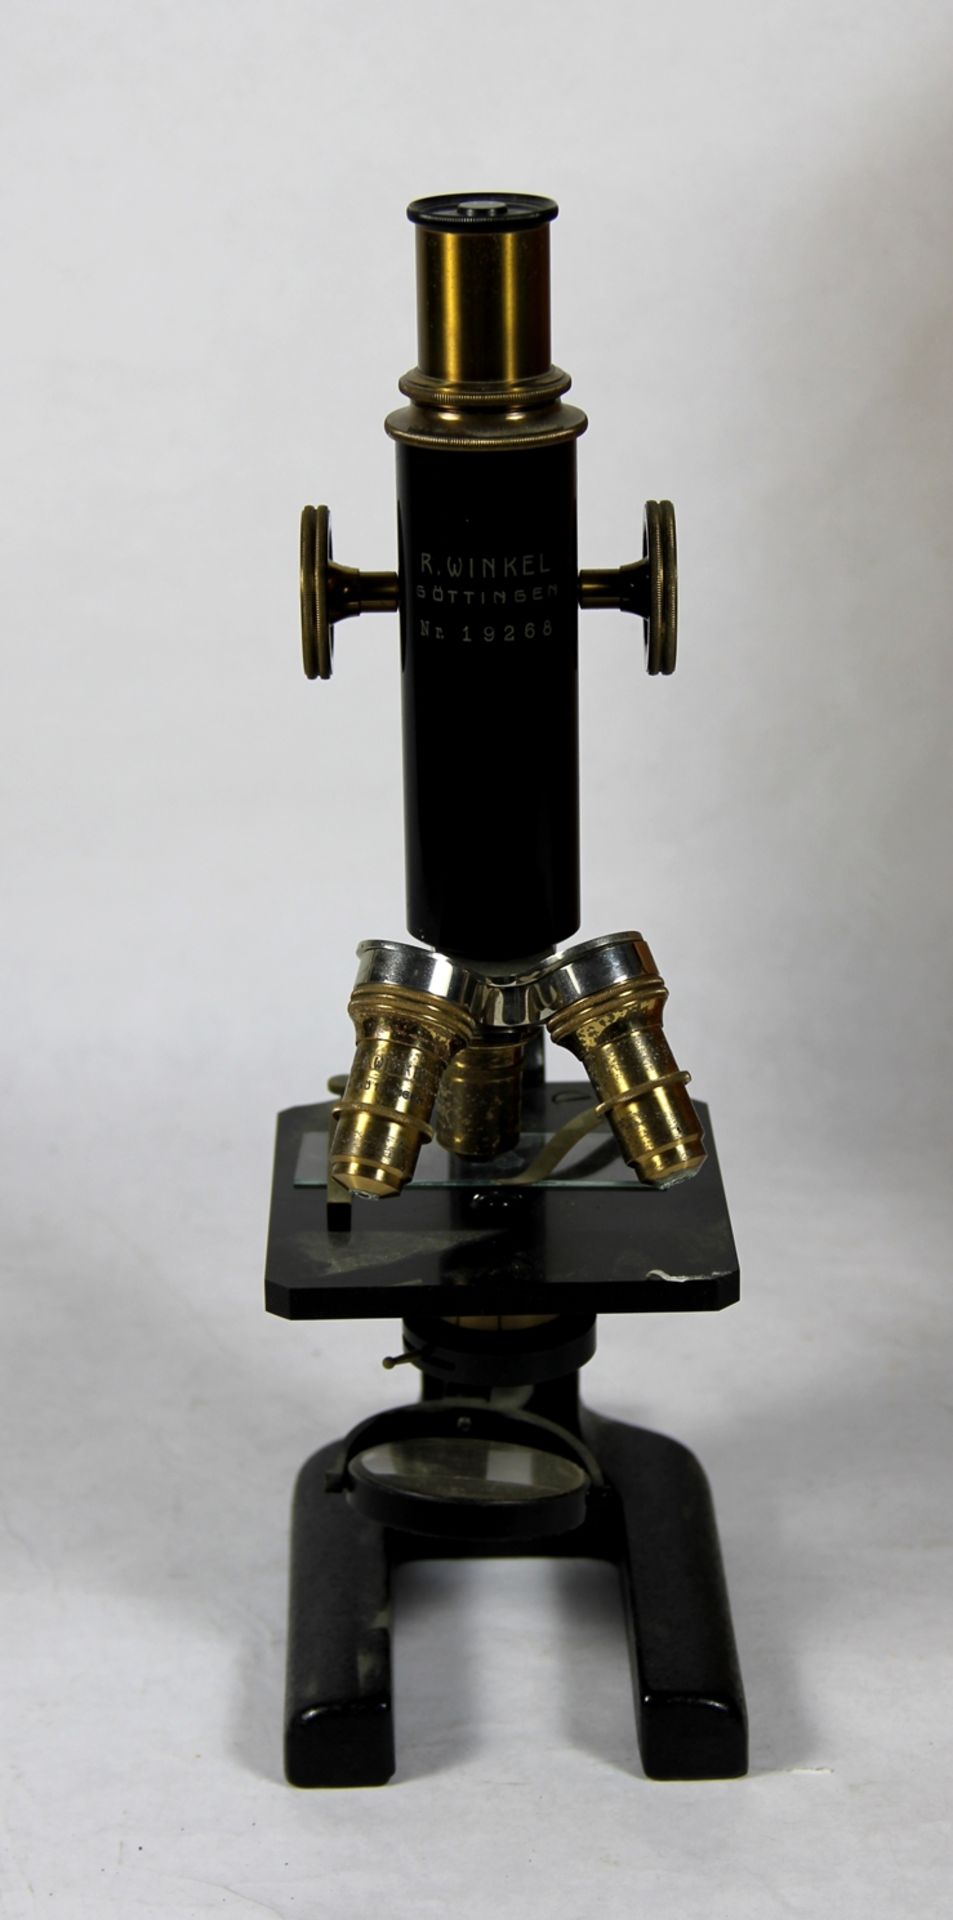 R. Winkel-Mikroskop - Image 3 of 5